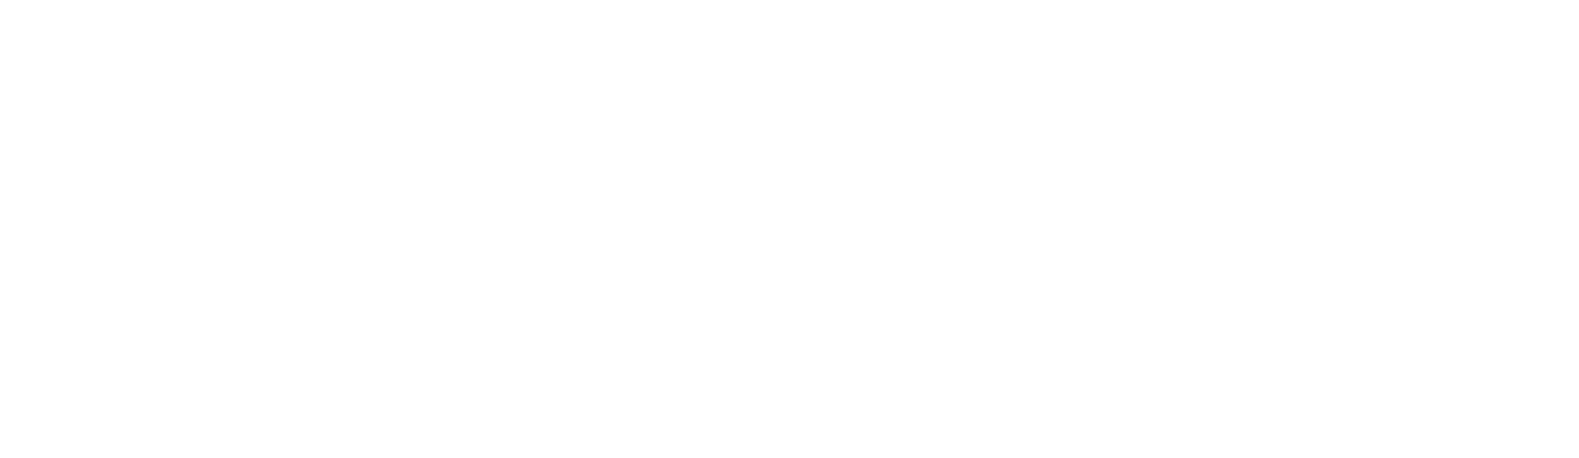 Hess Midstream logo large for dark backgrounds (transparent PNG)